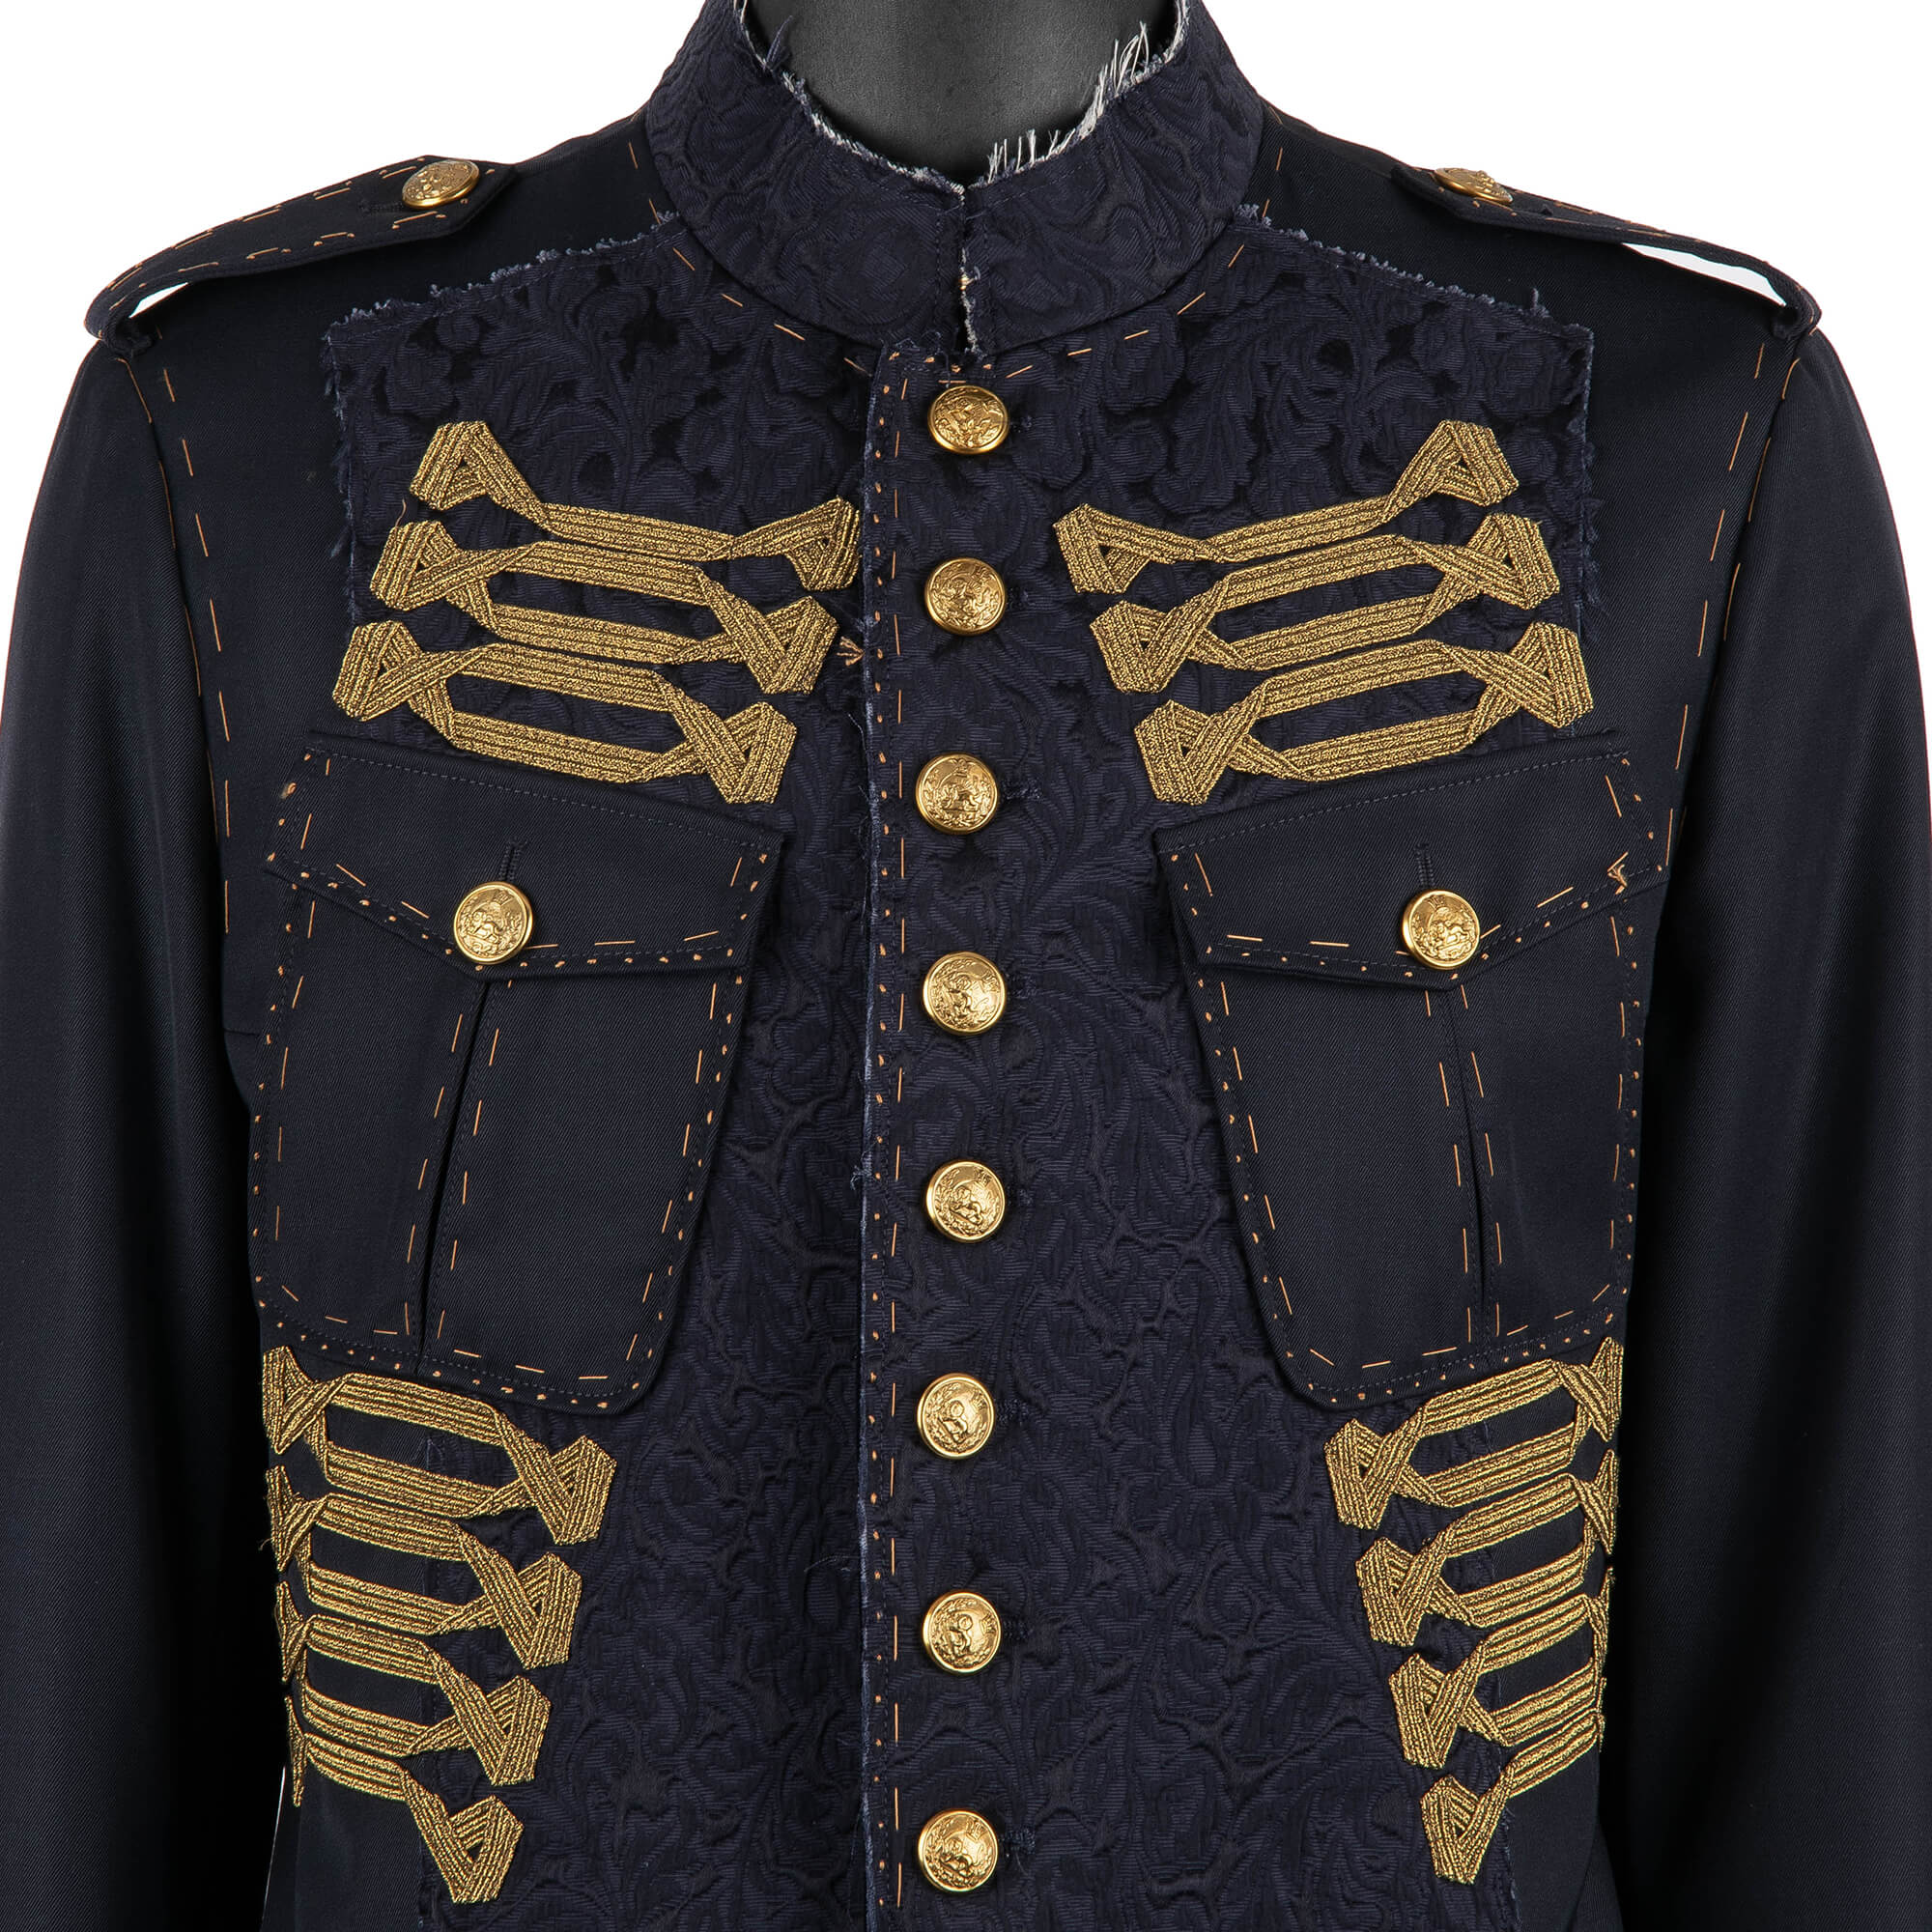 DOLCE-GABBANA-Royal-Military-Uniform-Short-Jacket-Blue-Gold-4.jpg